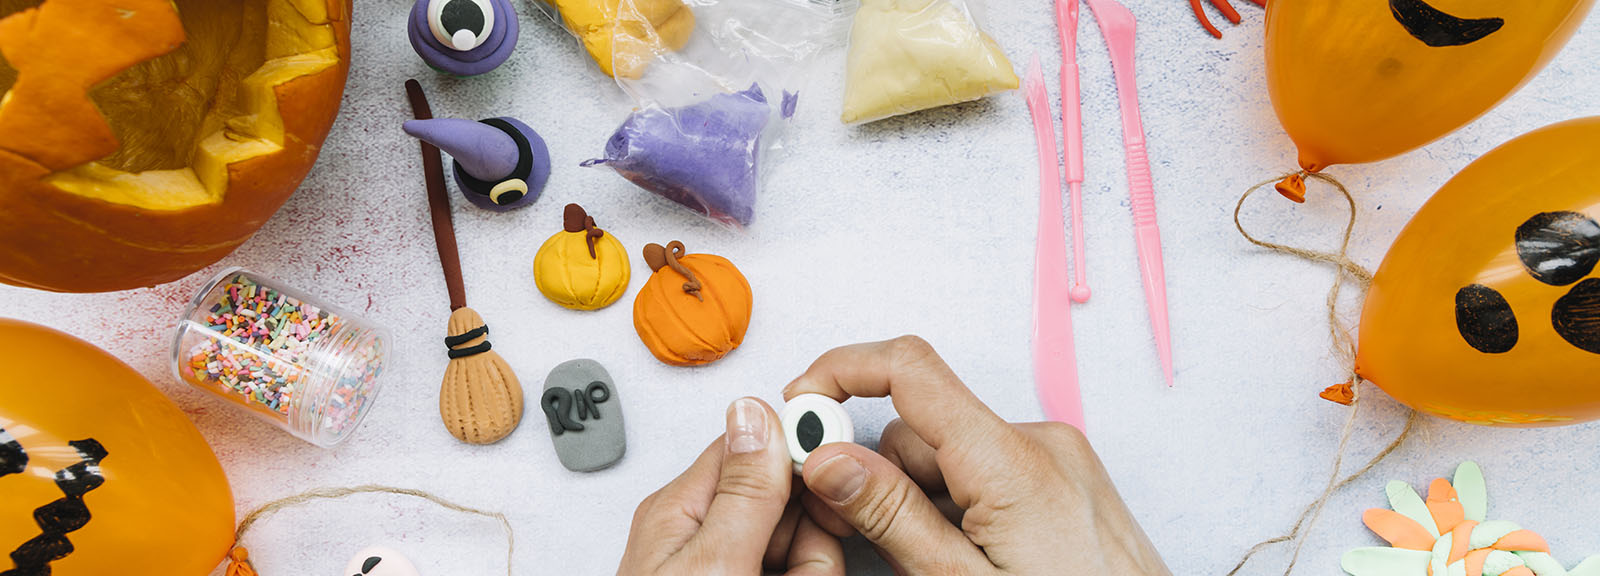 creative-workplace-with-plasticine-halloween-figures